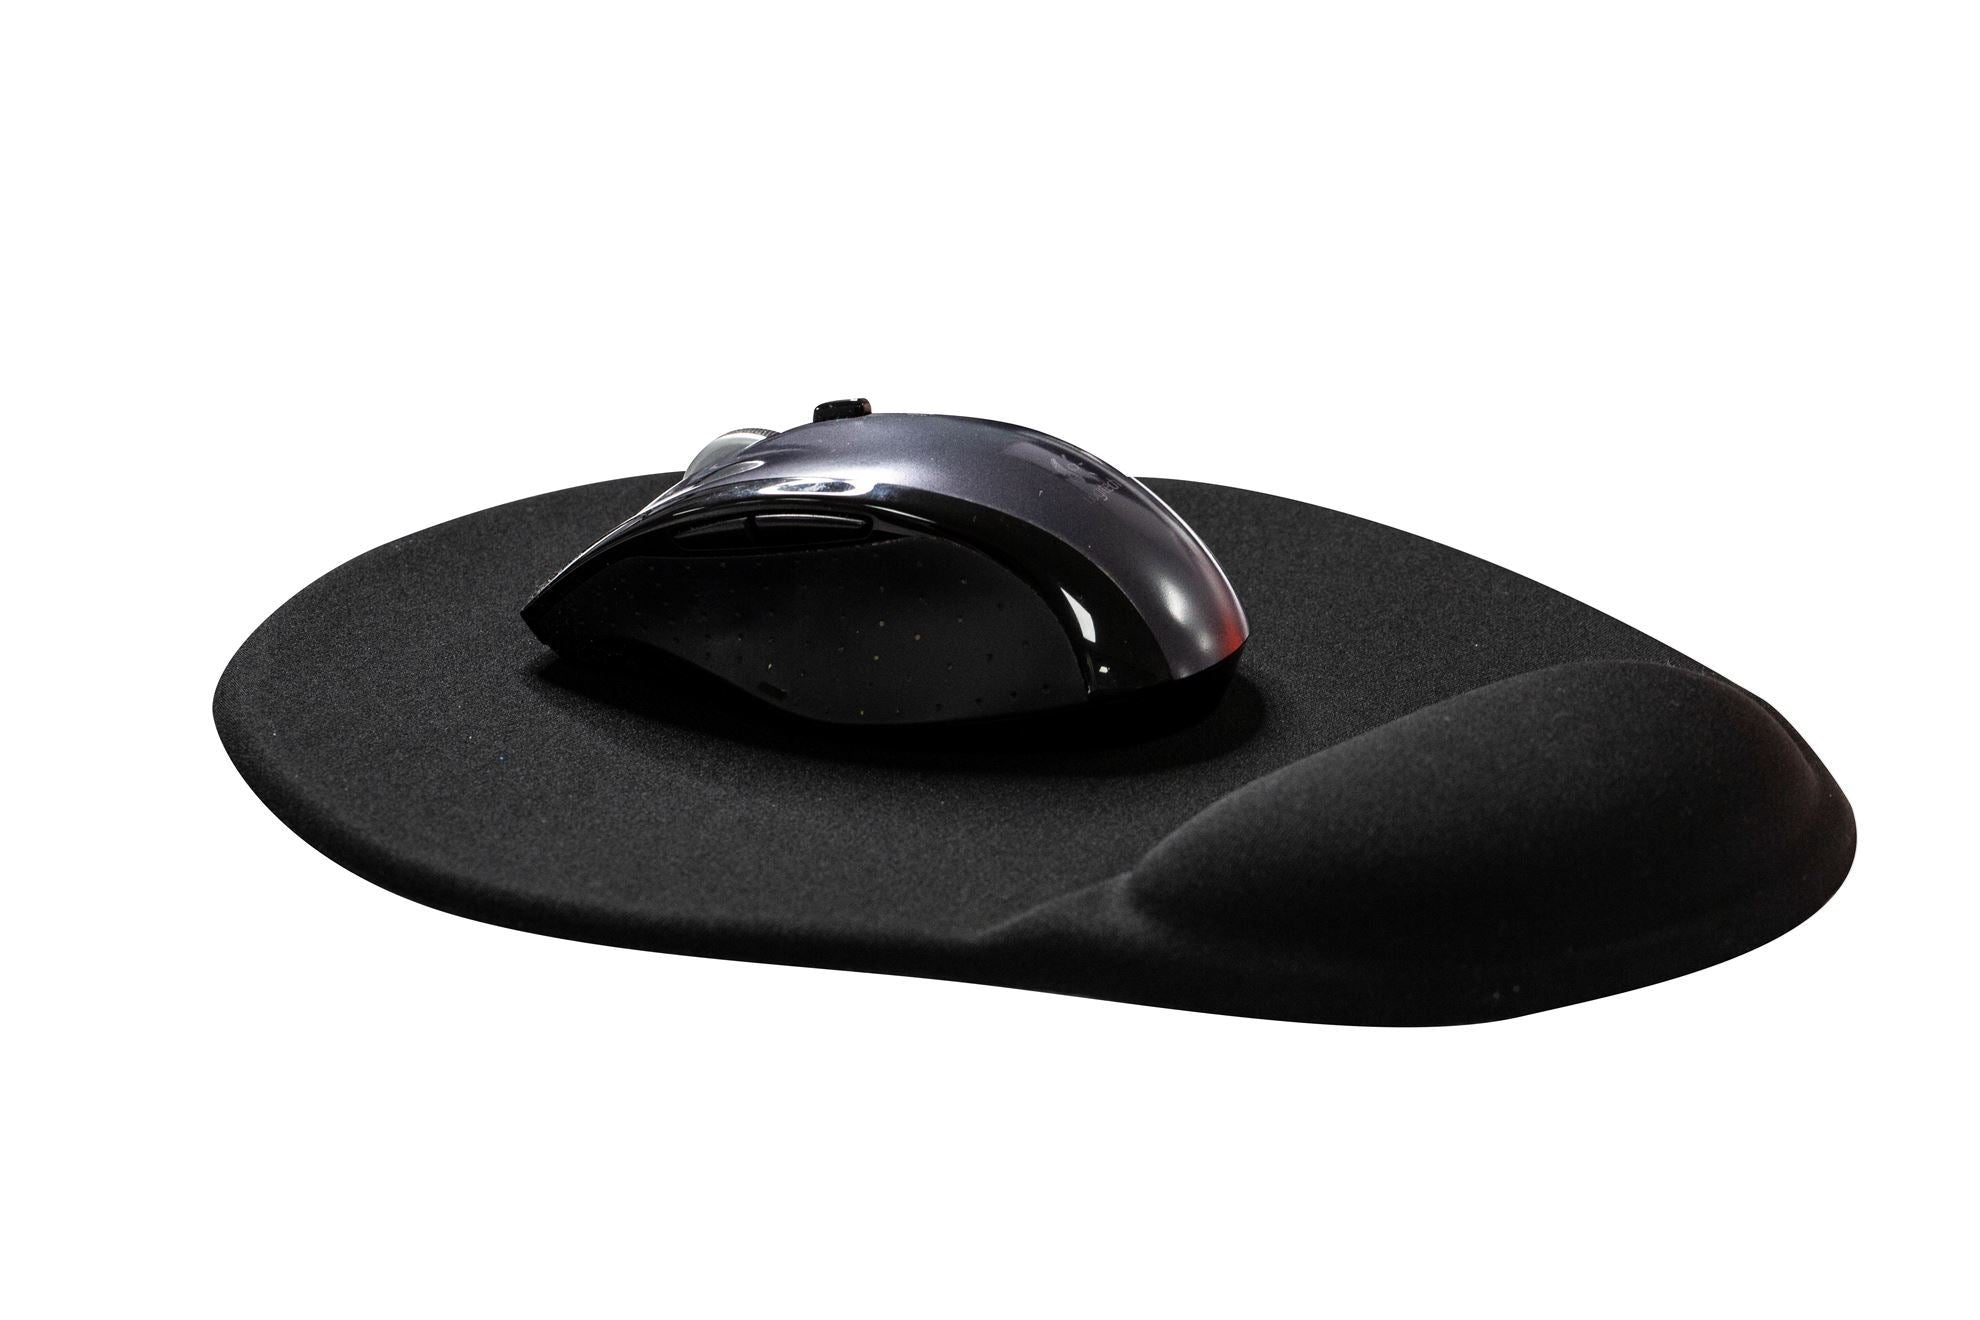 DYNAMIX Ergonomic Mouse Pad with Gel Palm Rest. Dimensions: 250 x 210 x 23mm.